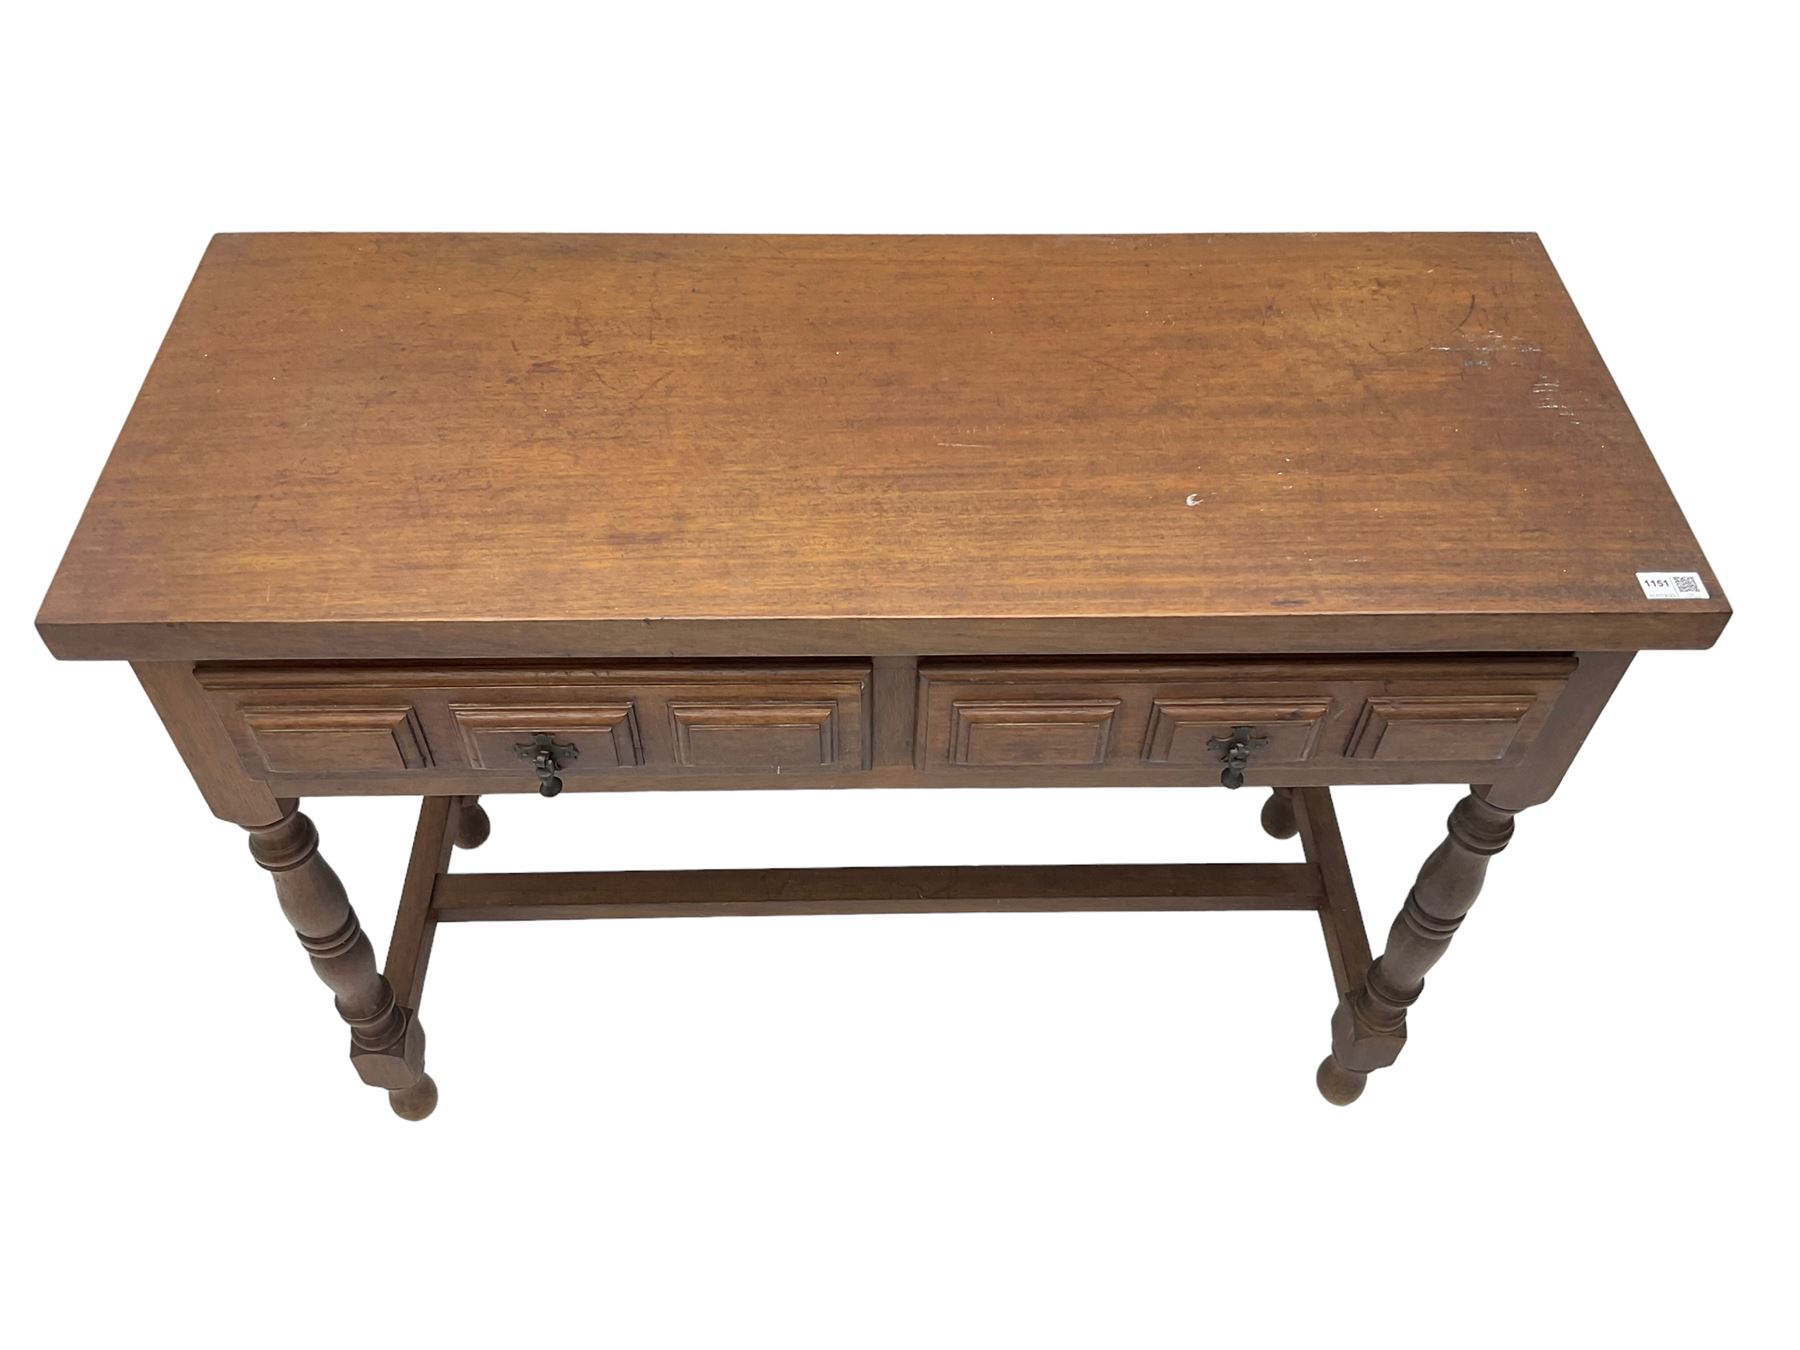 Spanish oak side table - Image 2 of 6